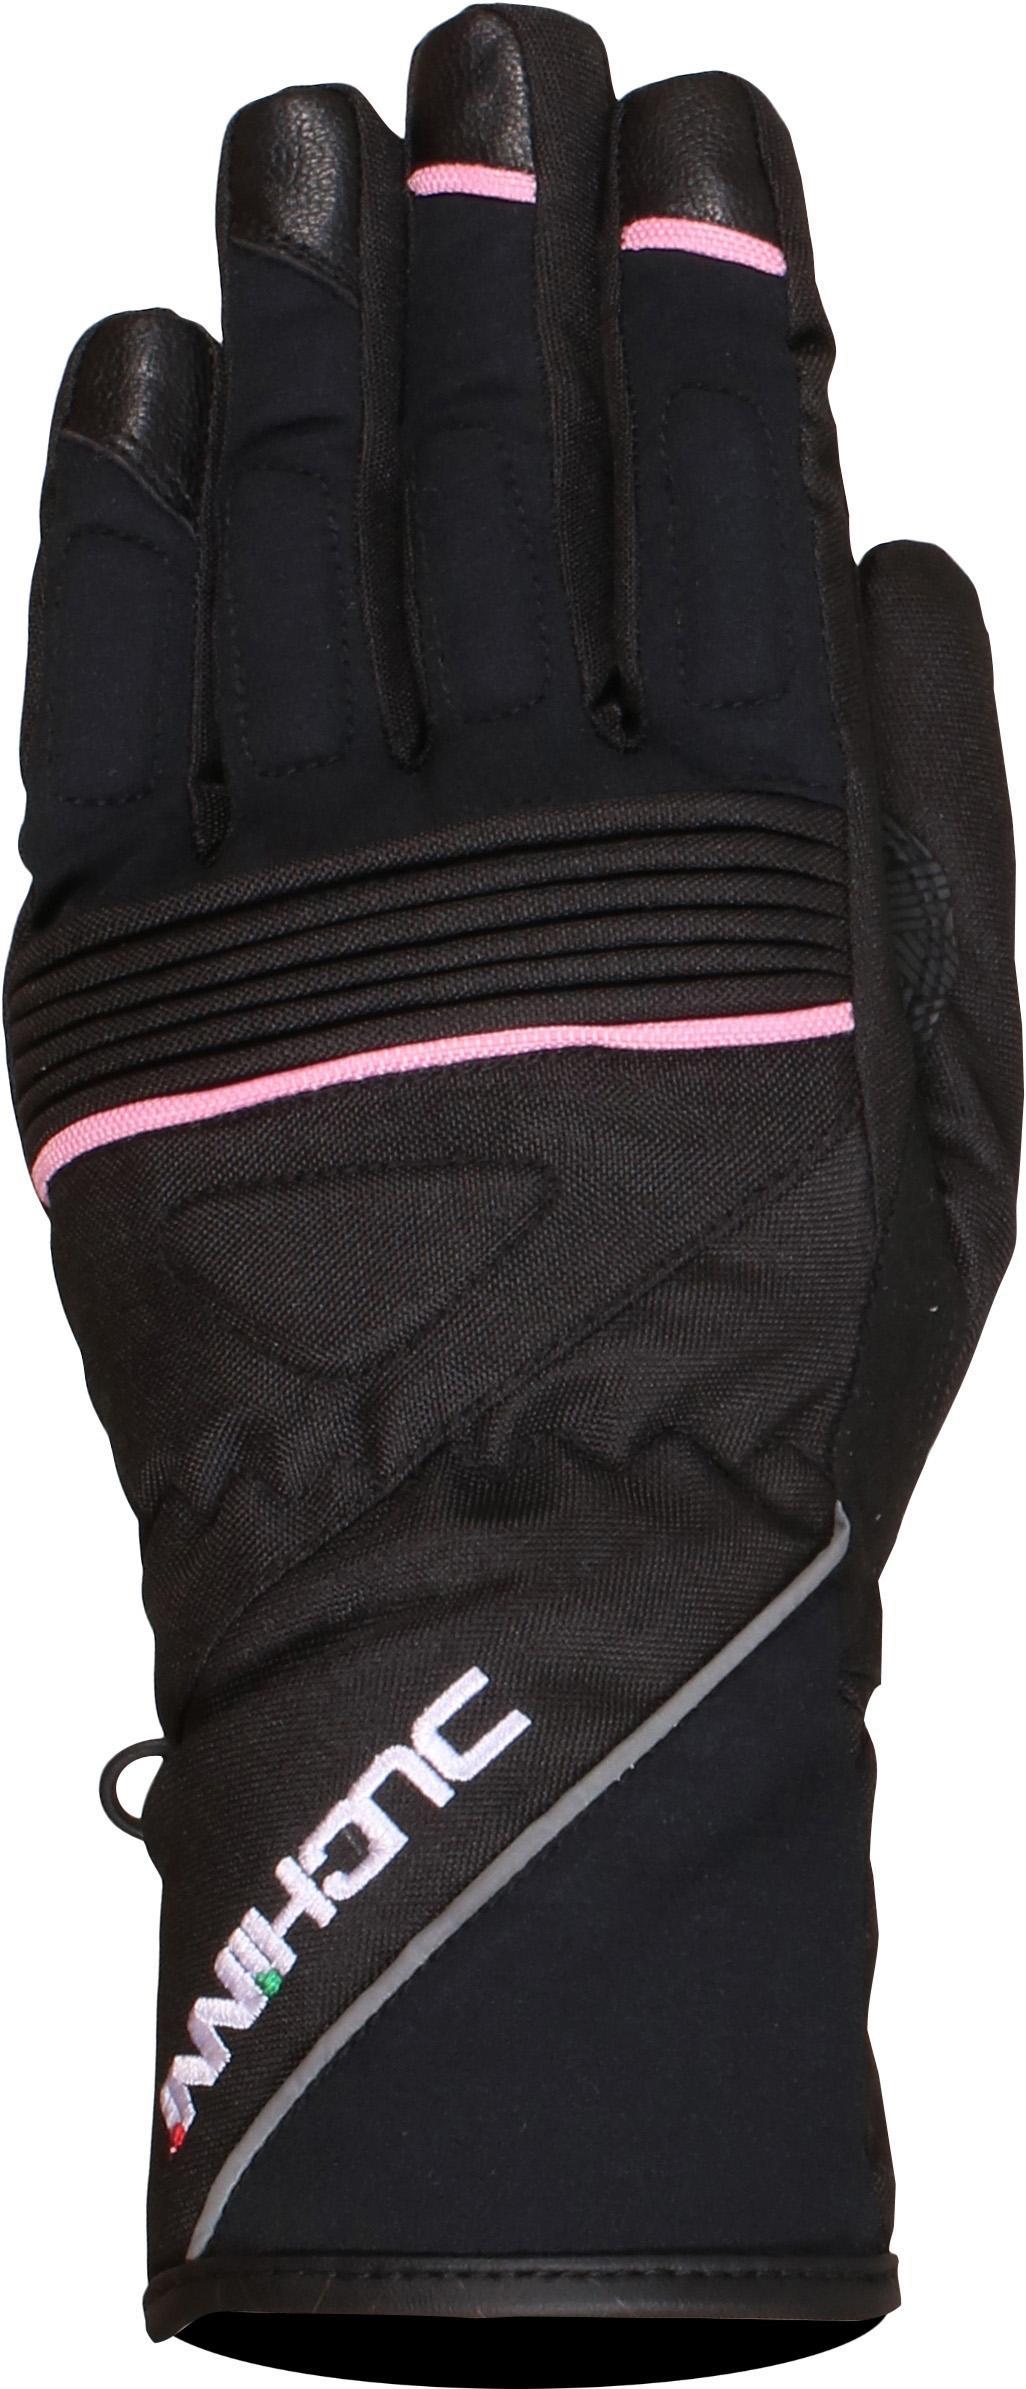 Duchinni Verona Women's Motorcycle Gloves - Black And Pink, Xl